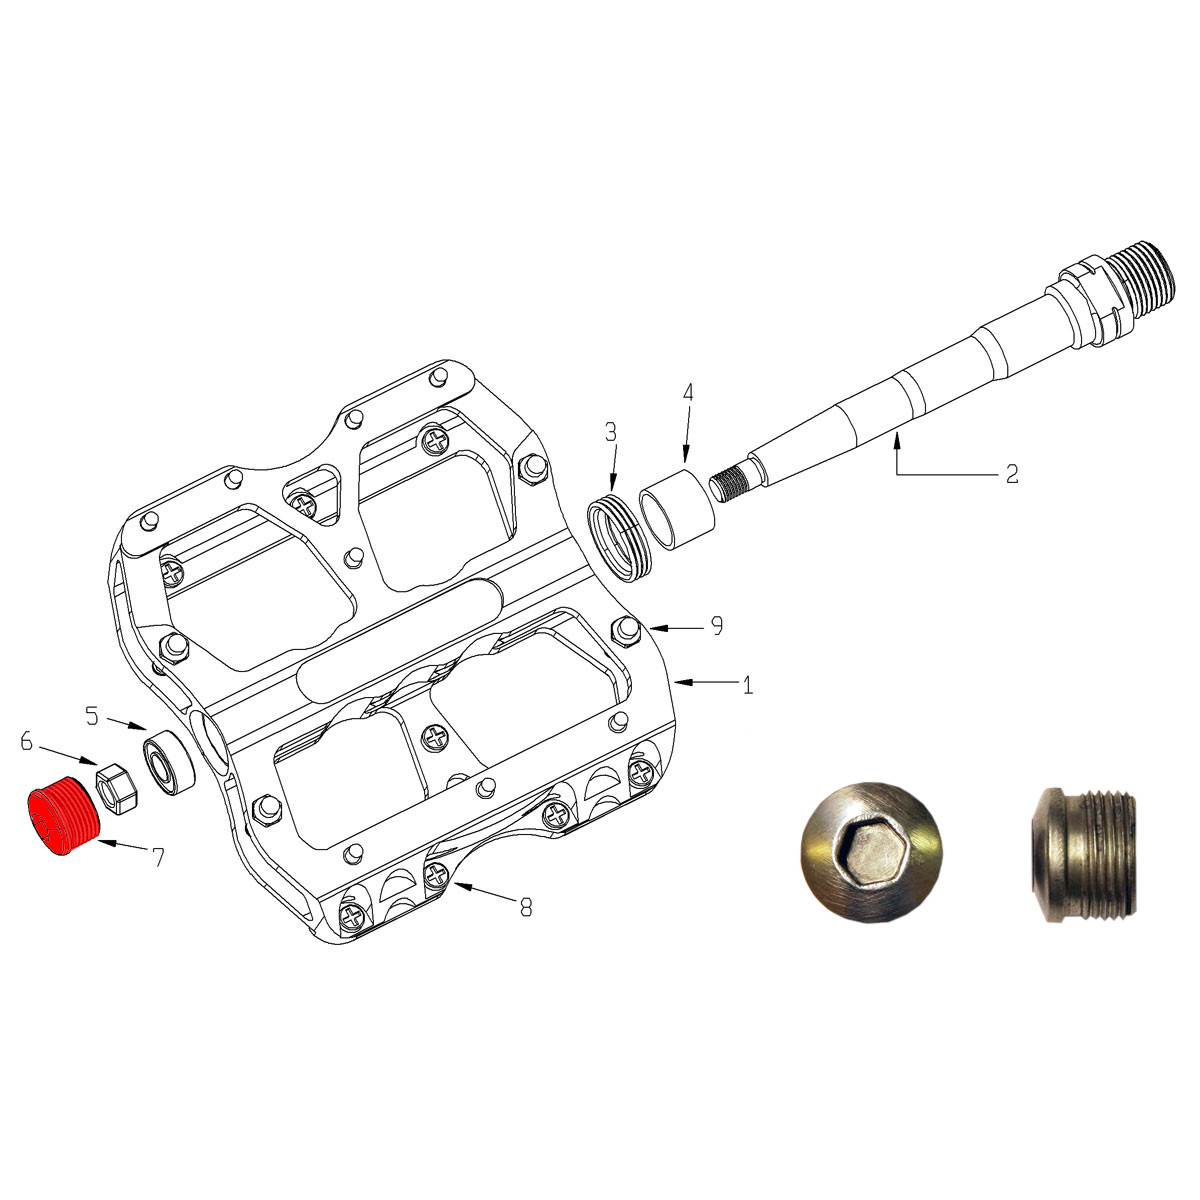 Picture of Reverse Components Axle Endcaps for Escape Pedals